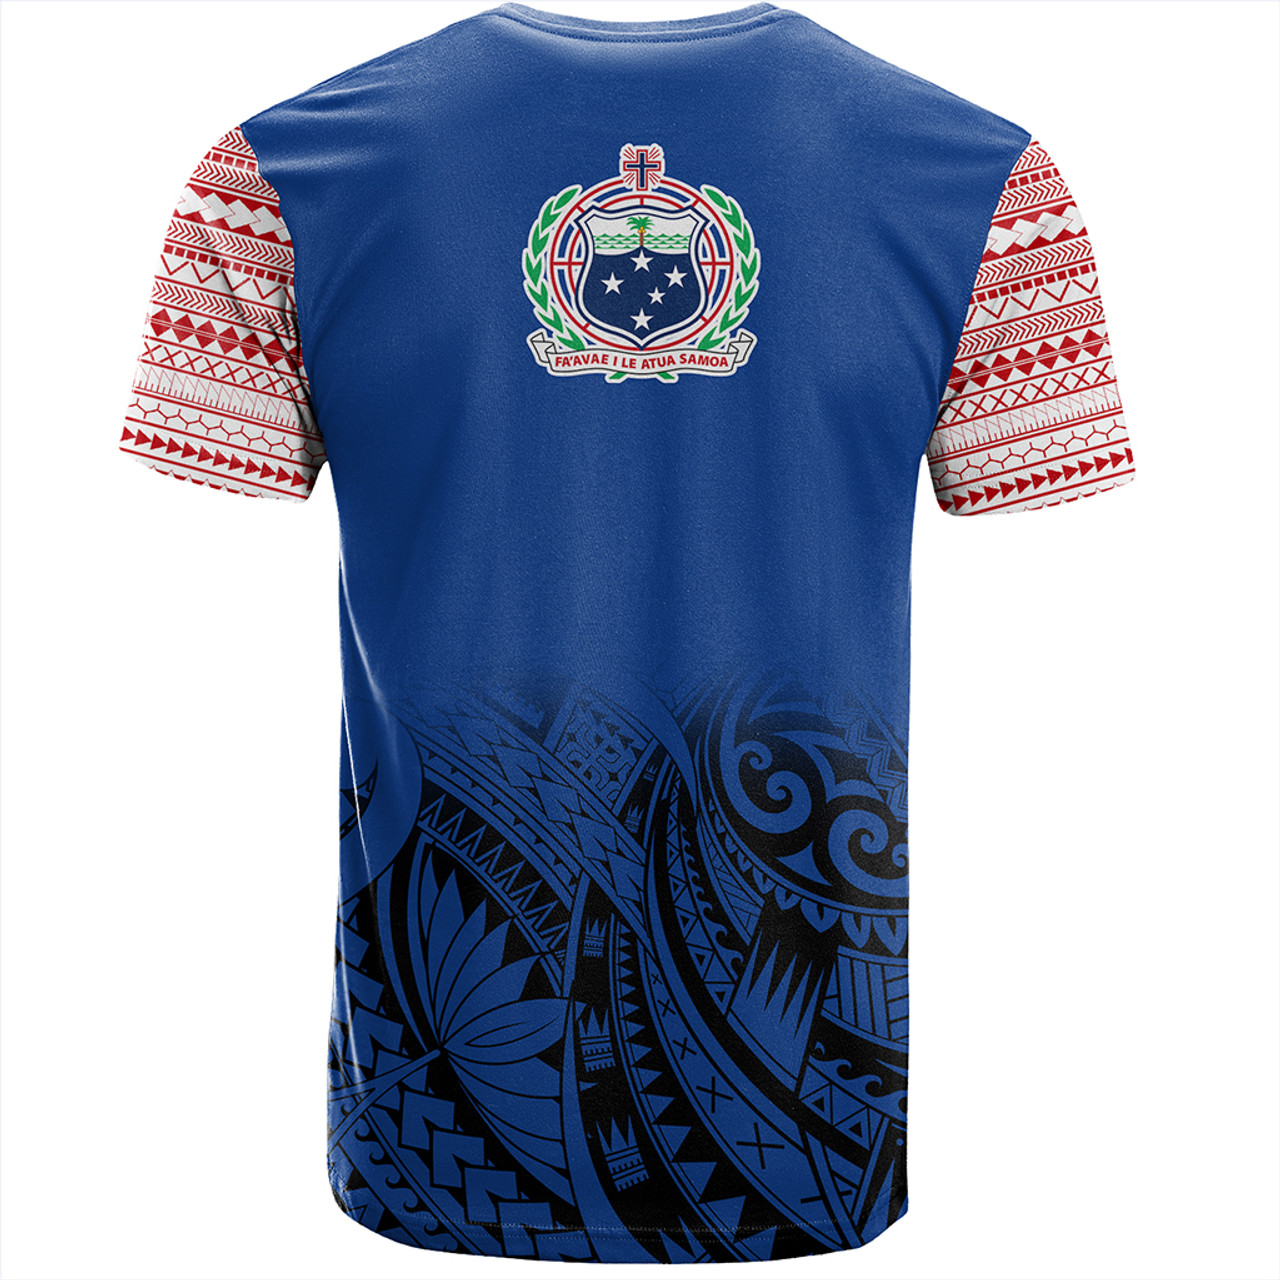 Samoa T-Shirt Tribal Polynseian Special